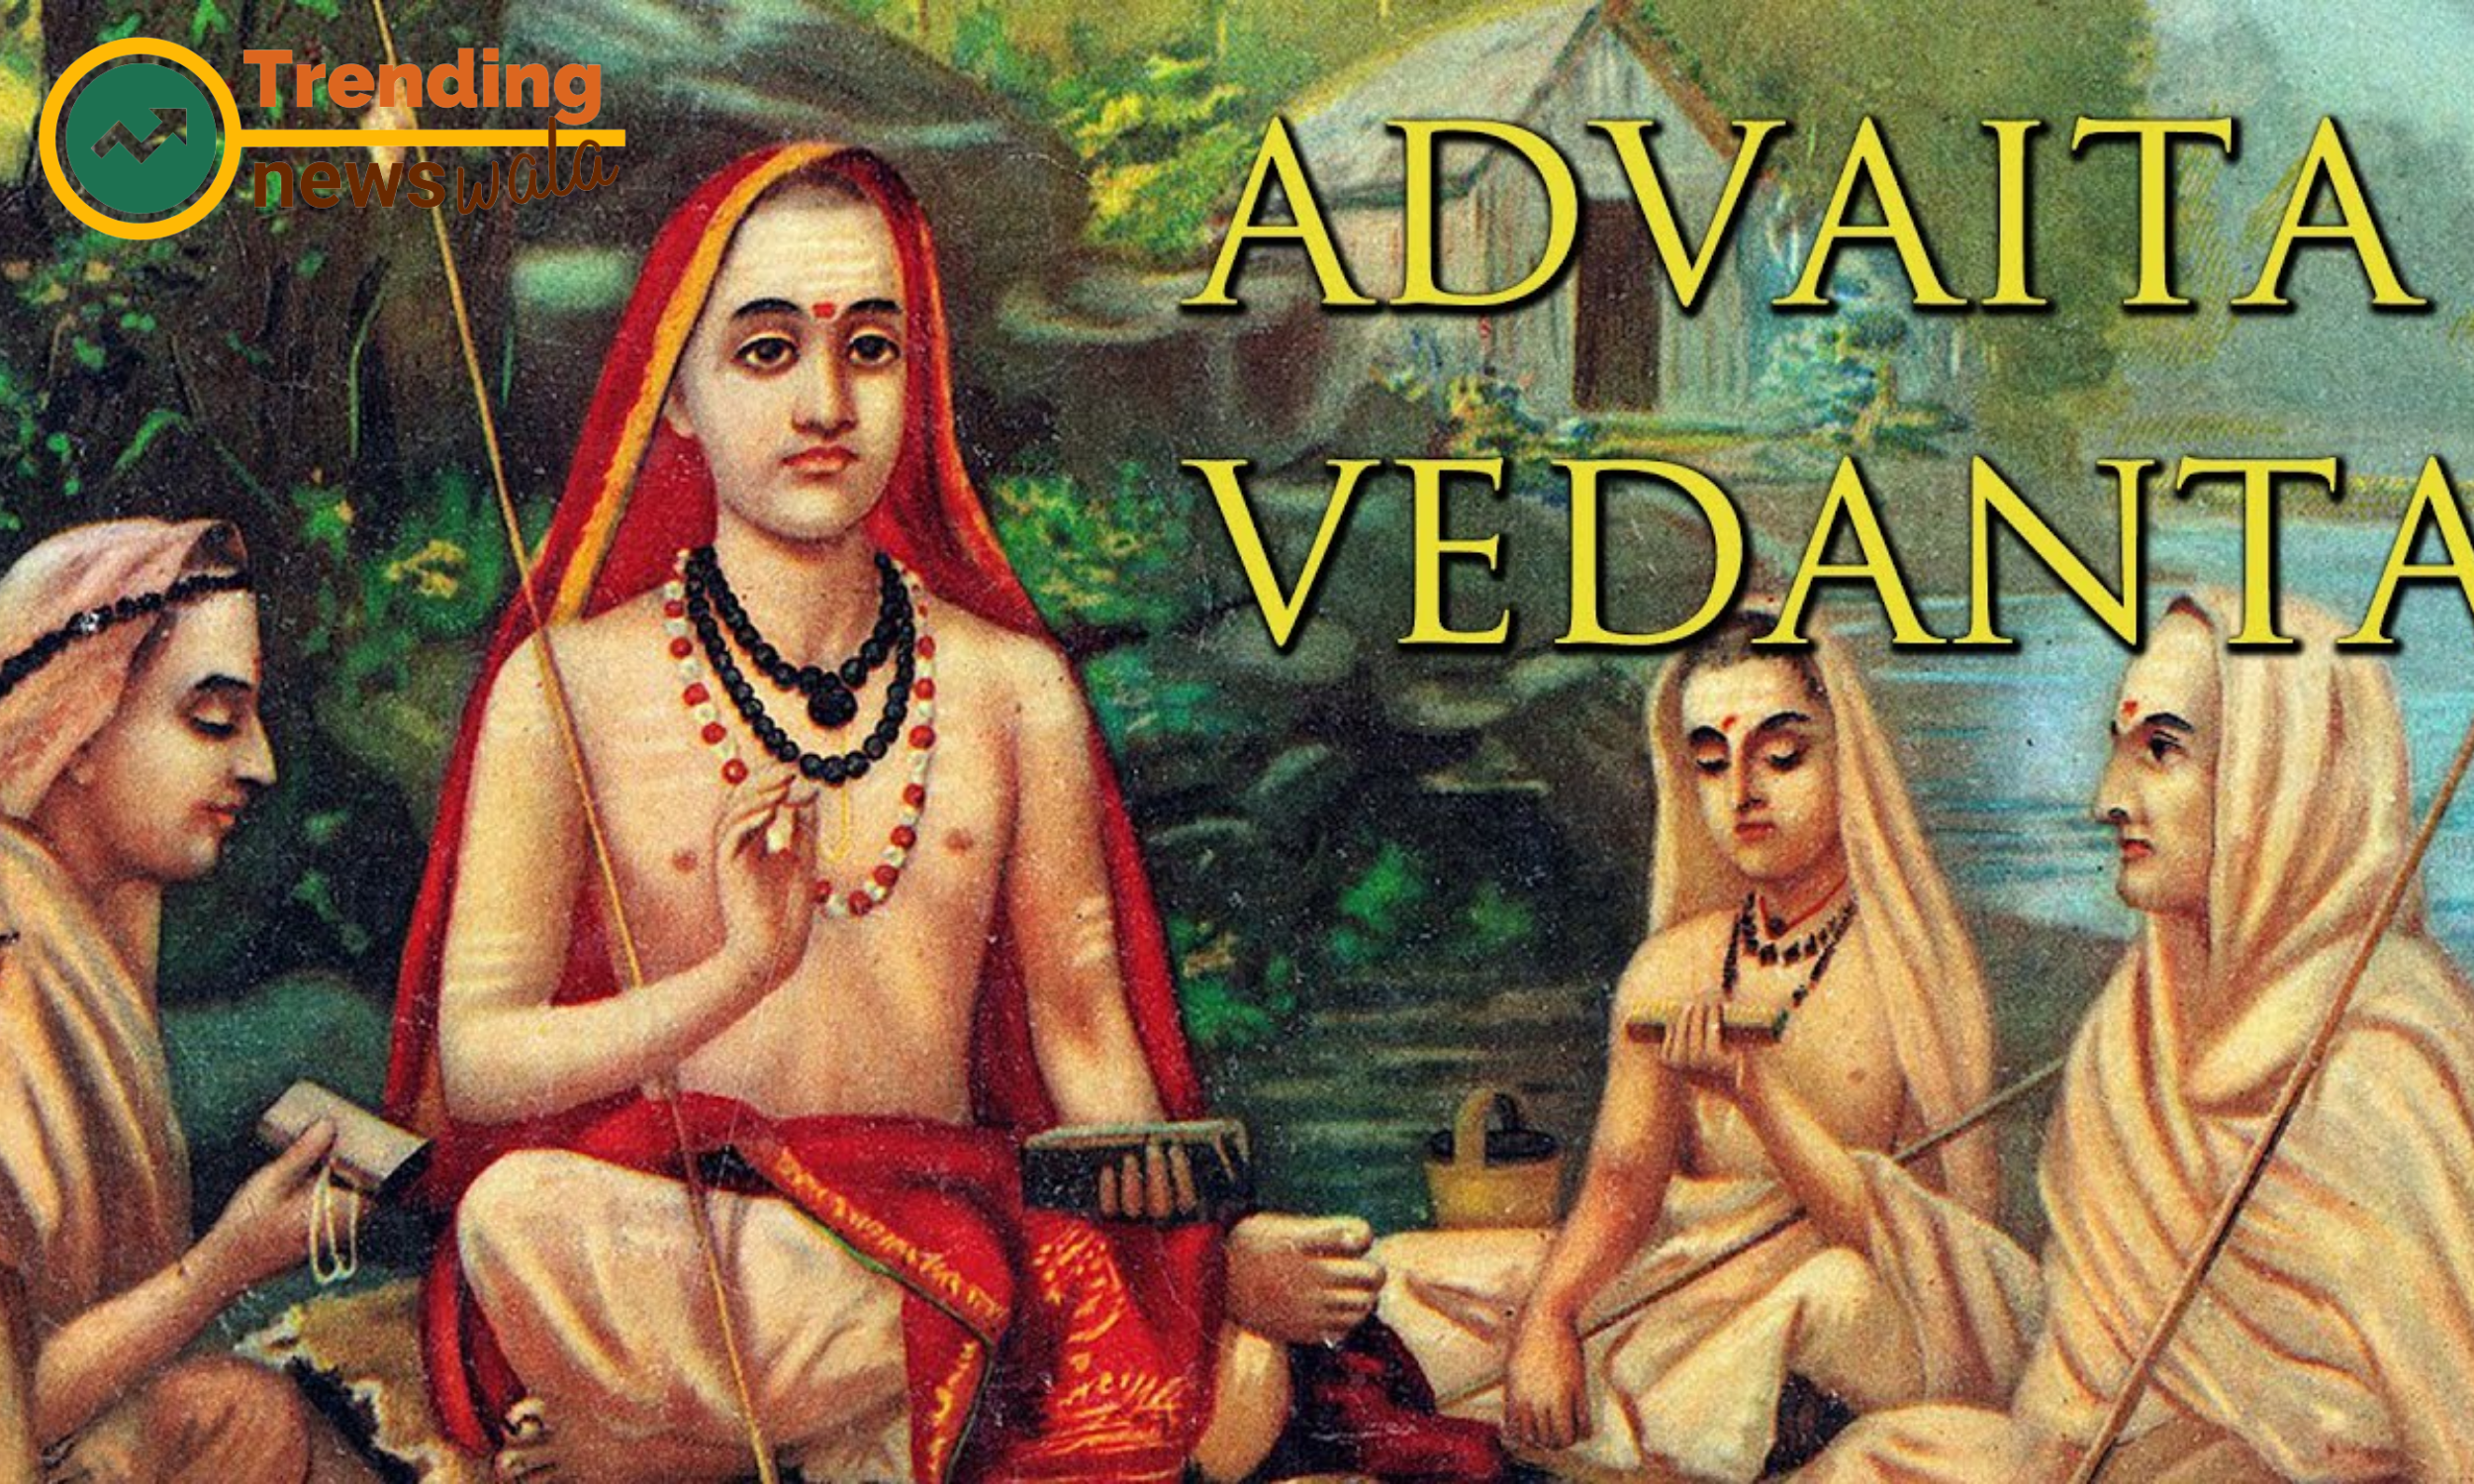 Shiva's teachings align with the philosophy of Advaita Vedanta